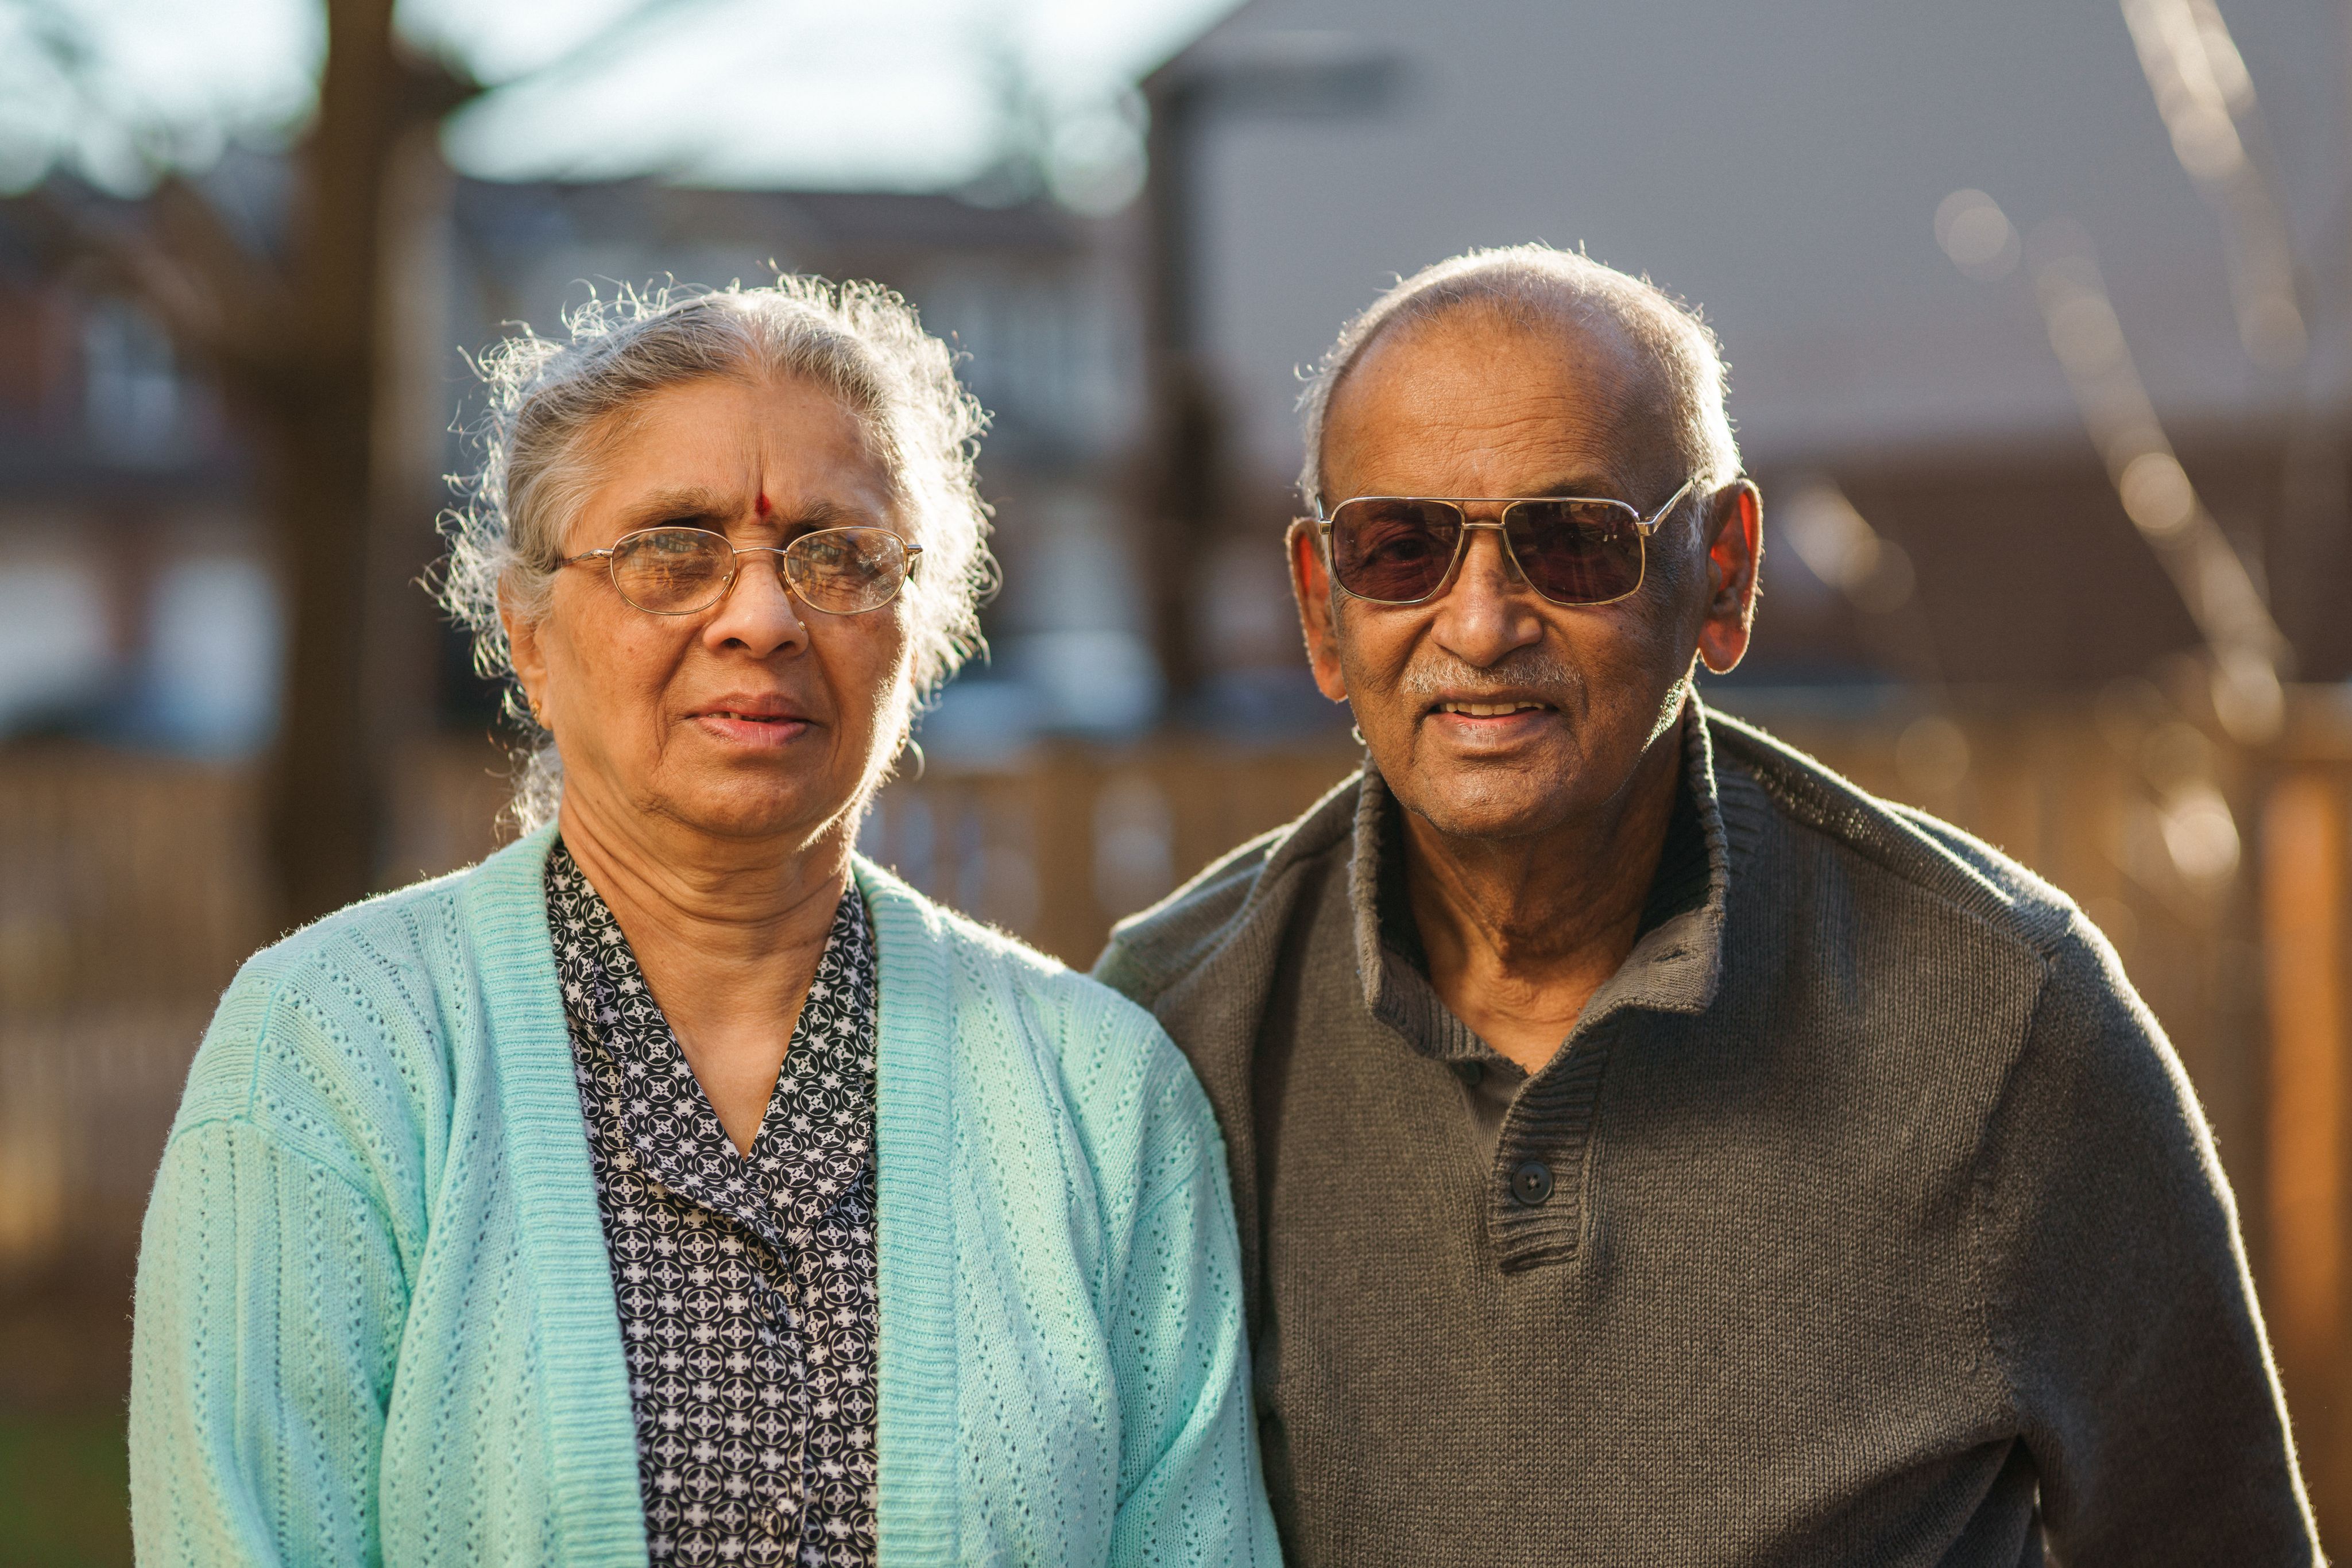 Seniors Housing Services – City of Toronto